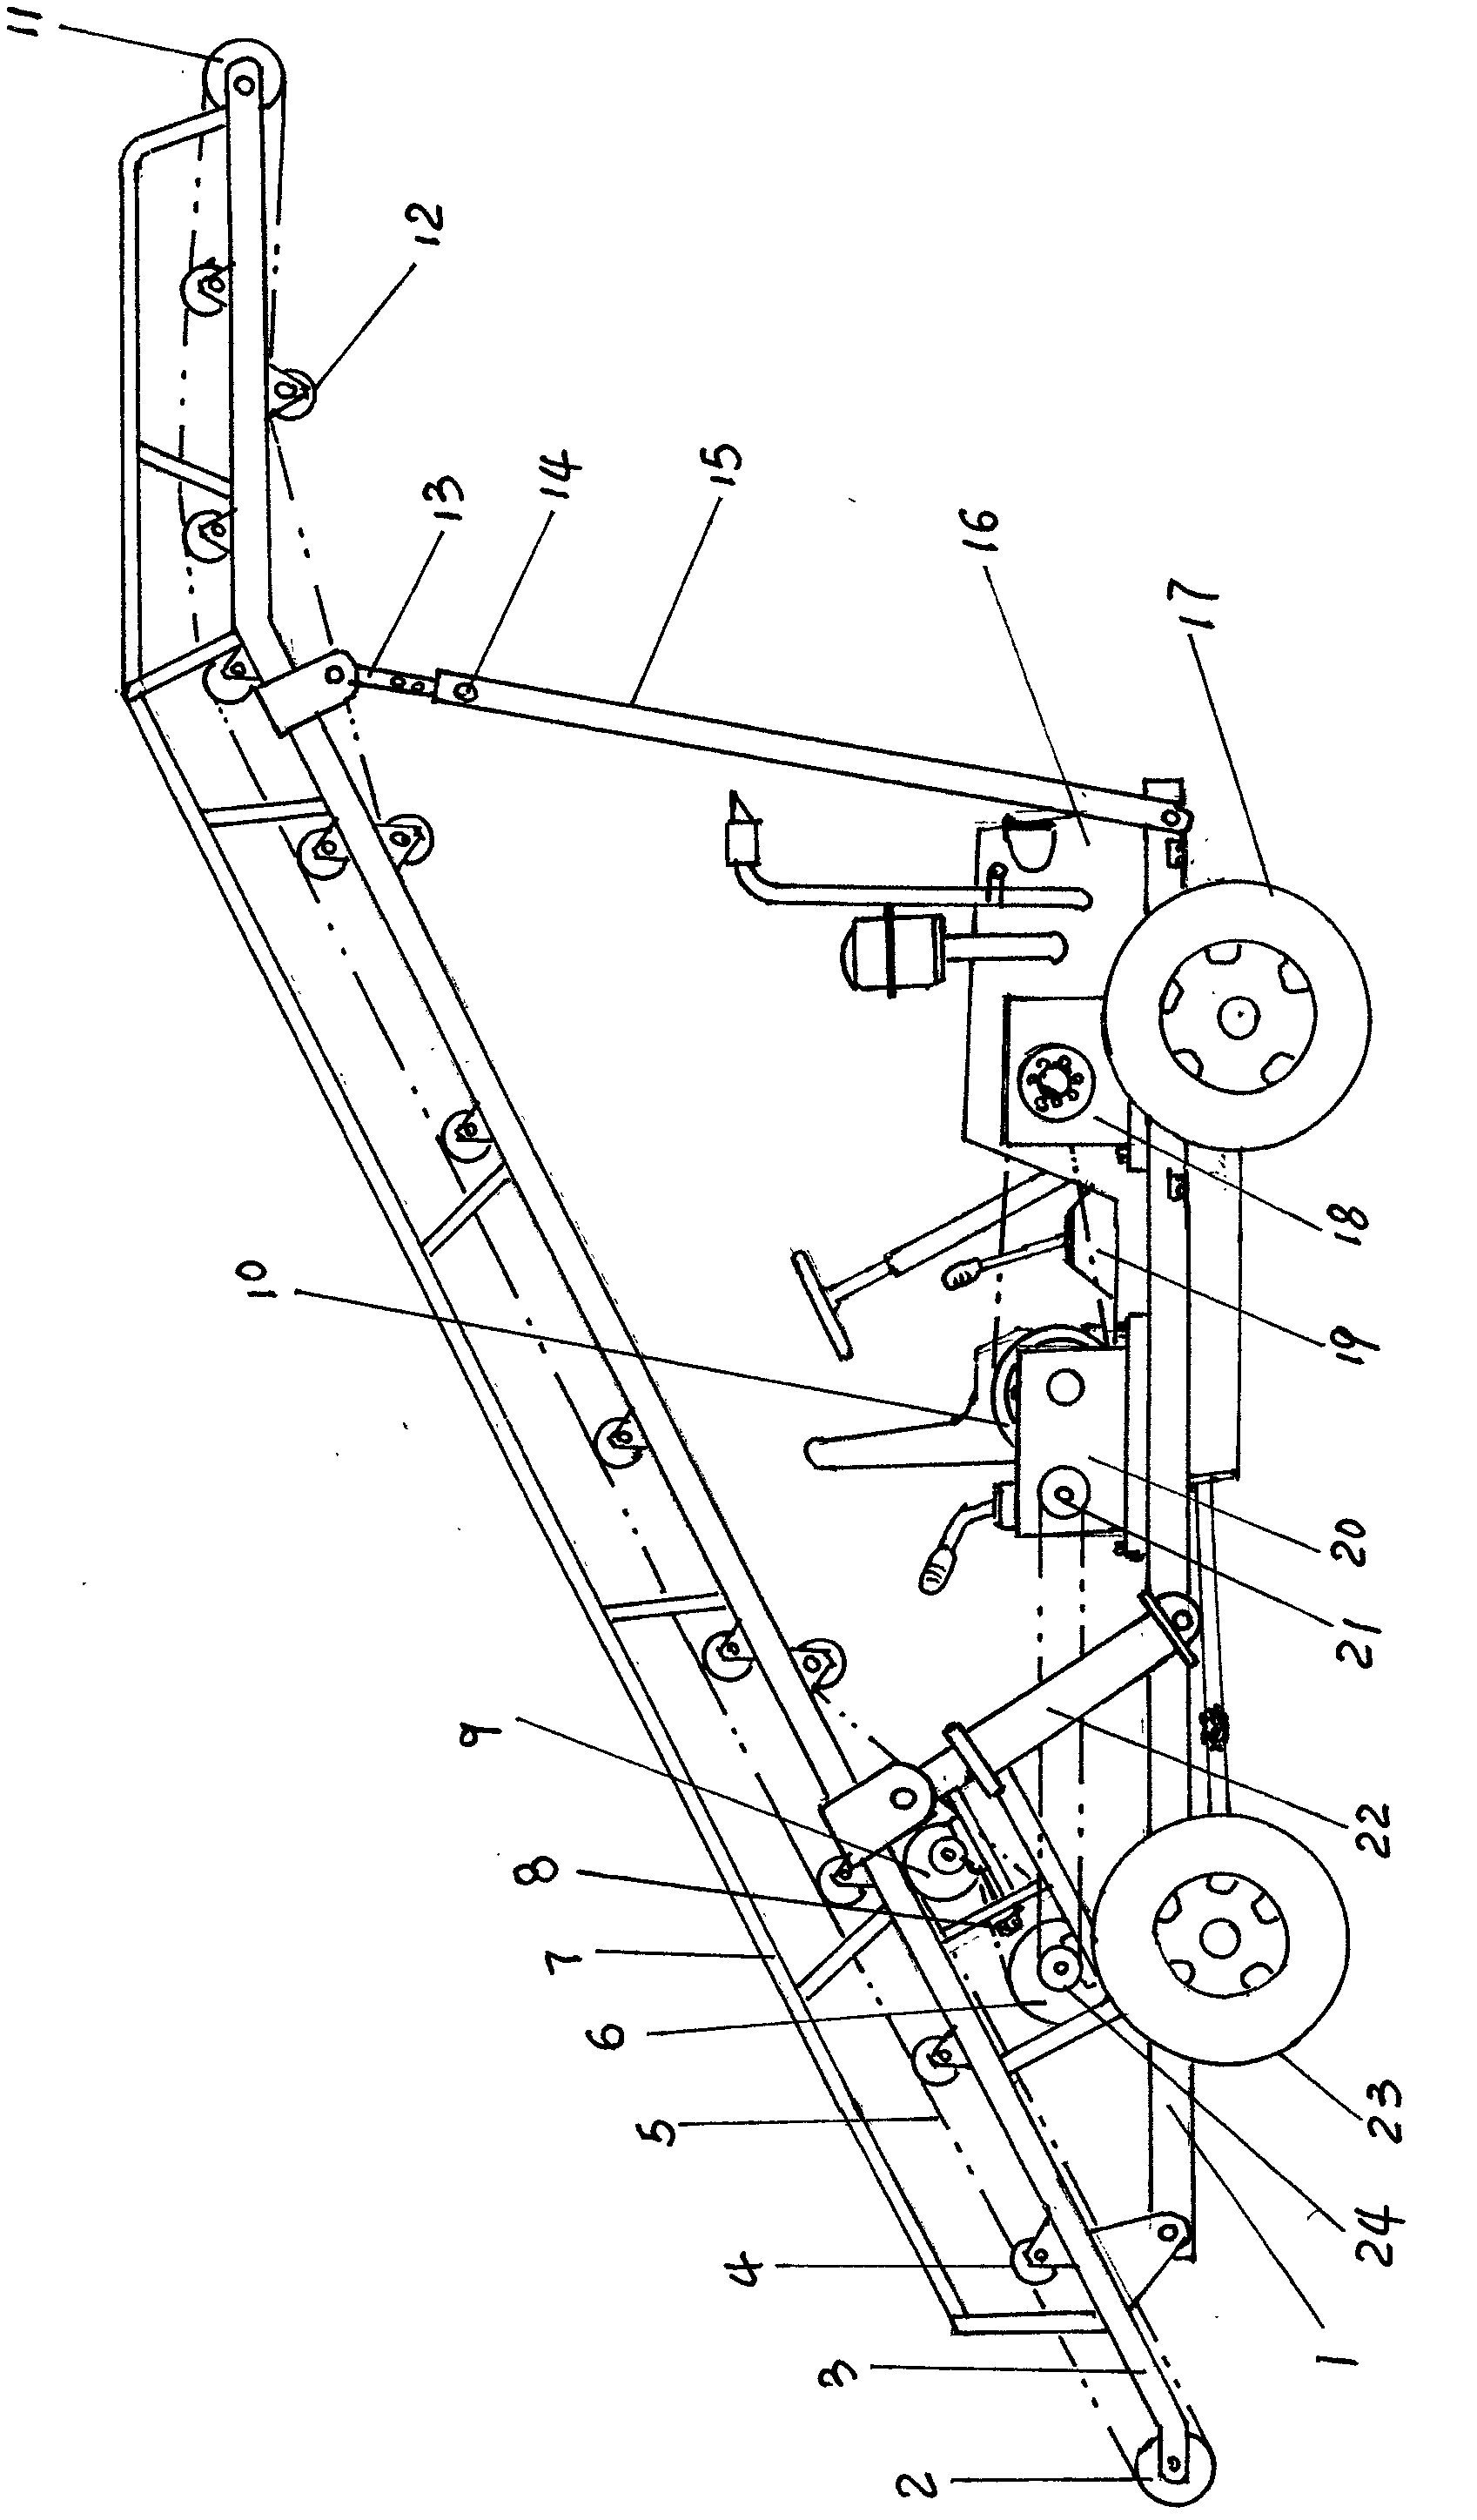 Vehicle-mounted adhesive tape conveyor